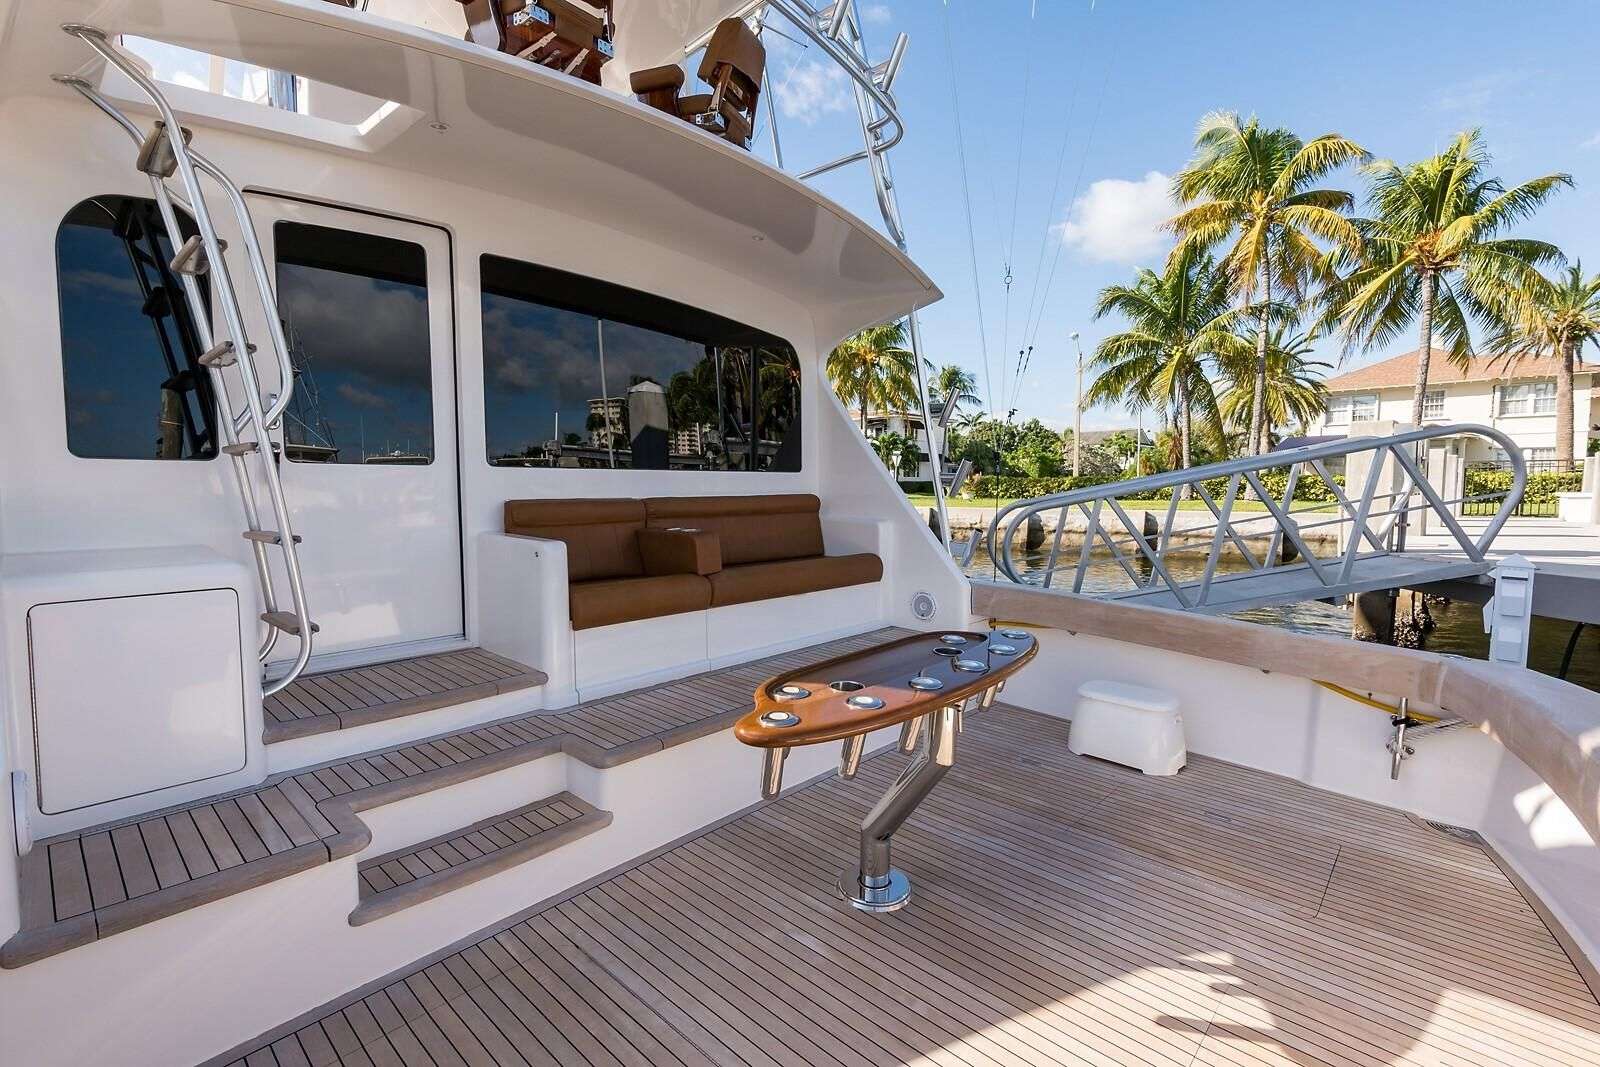 JAYWALKER - Motor Boat Charter USA & Boat hire in Florida & Bahamas 4